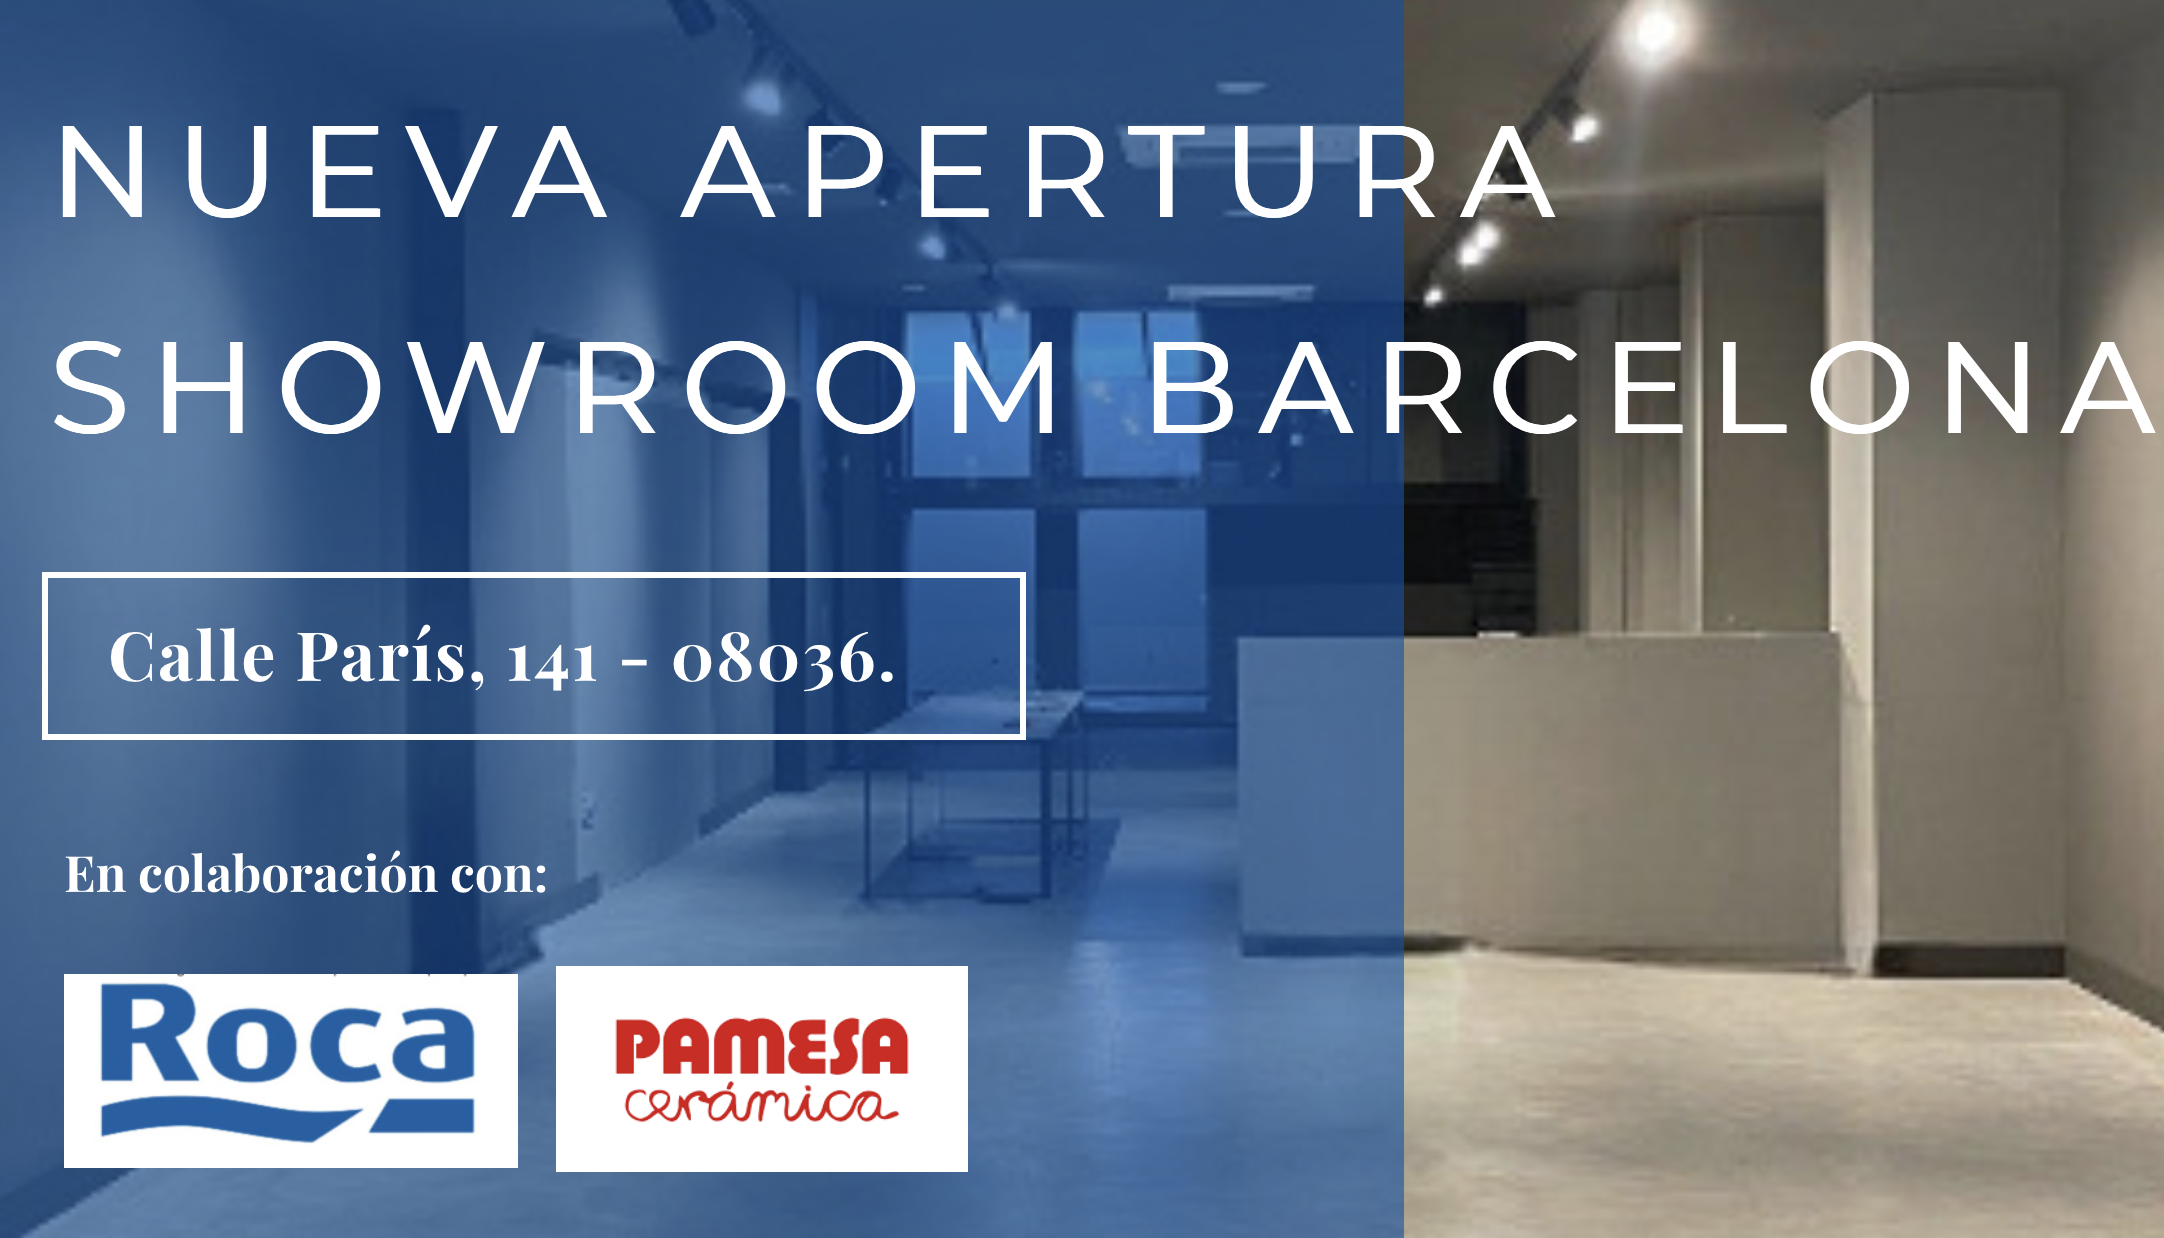 Proxima Apertura Showroom Masia Barcelona, calle Paris, 141